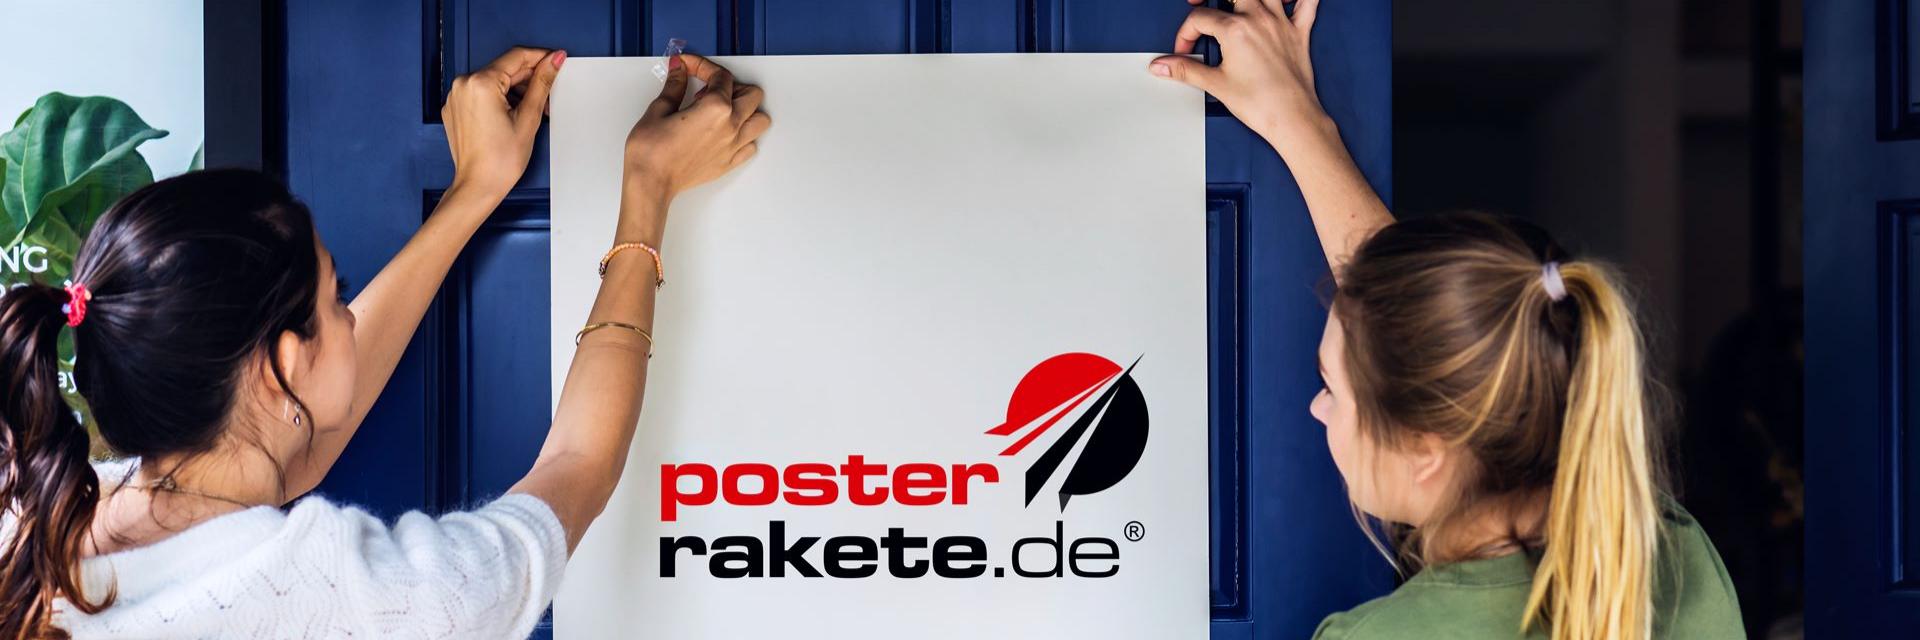 www.posterrakete.de